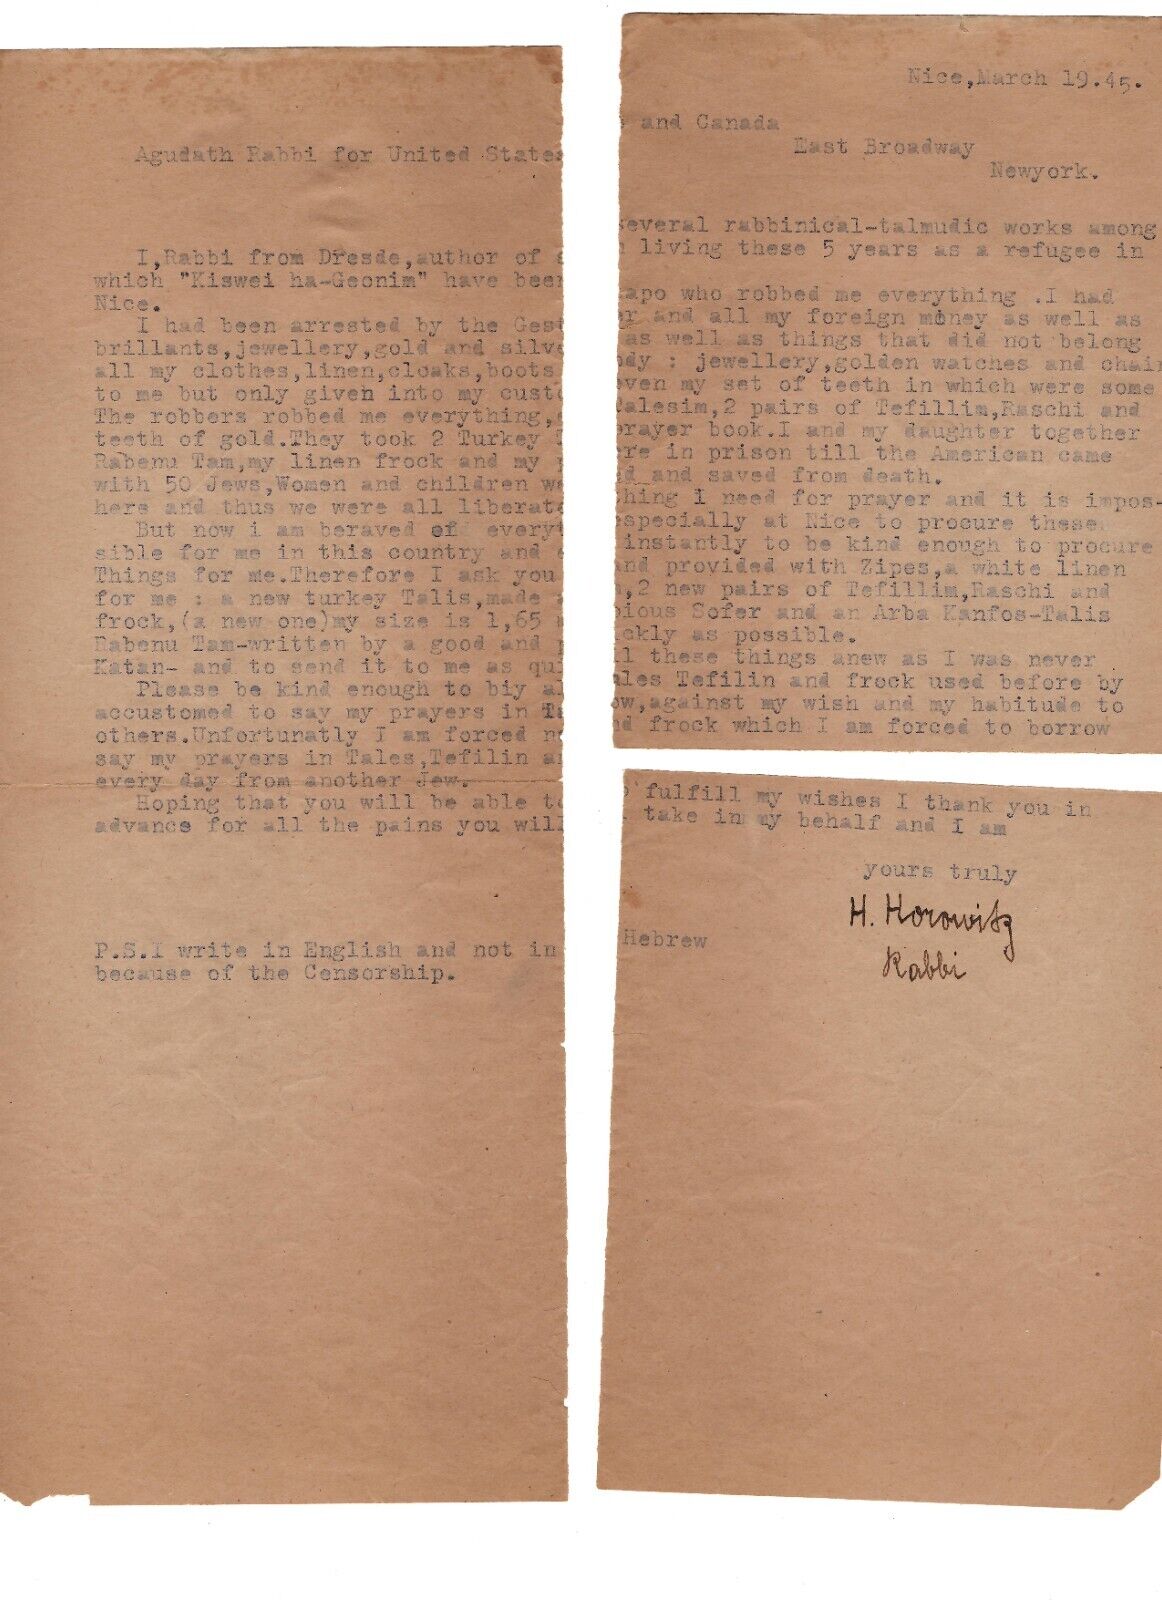 Post Holocaust Letter by Rabbi Tzvi Hirsch Horwitz Rav of Dresden 1945